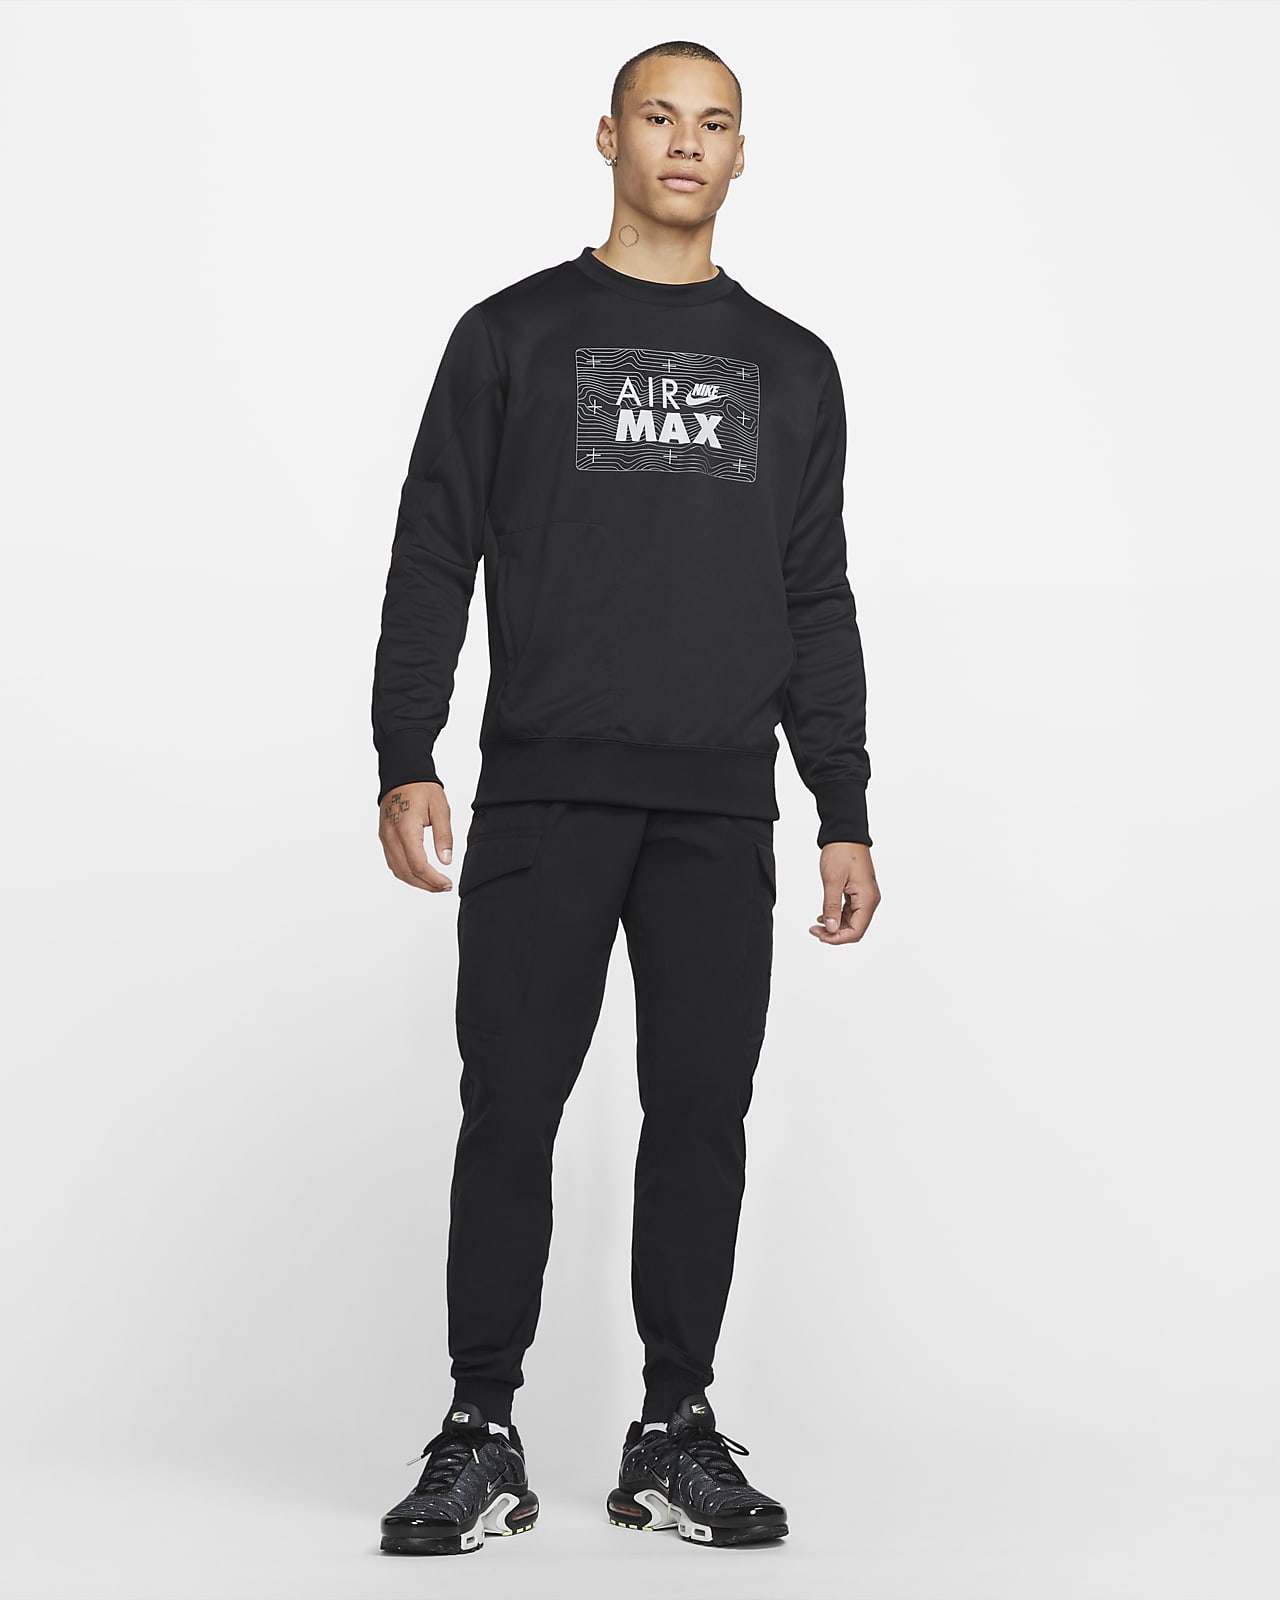 Nike Sportswear Air Max Men's Sweatshirt. Nike LU